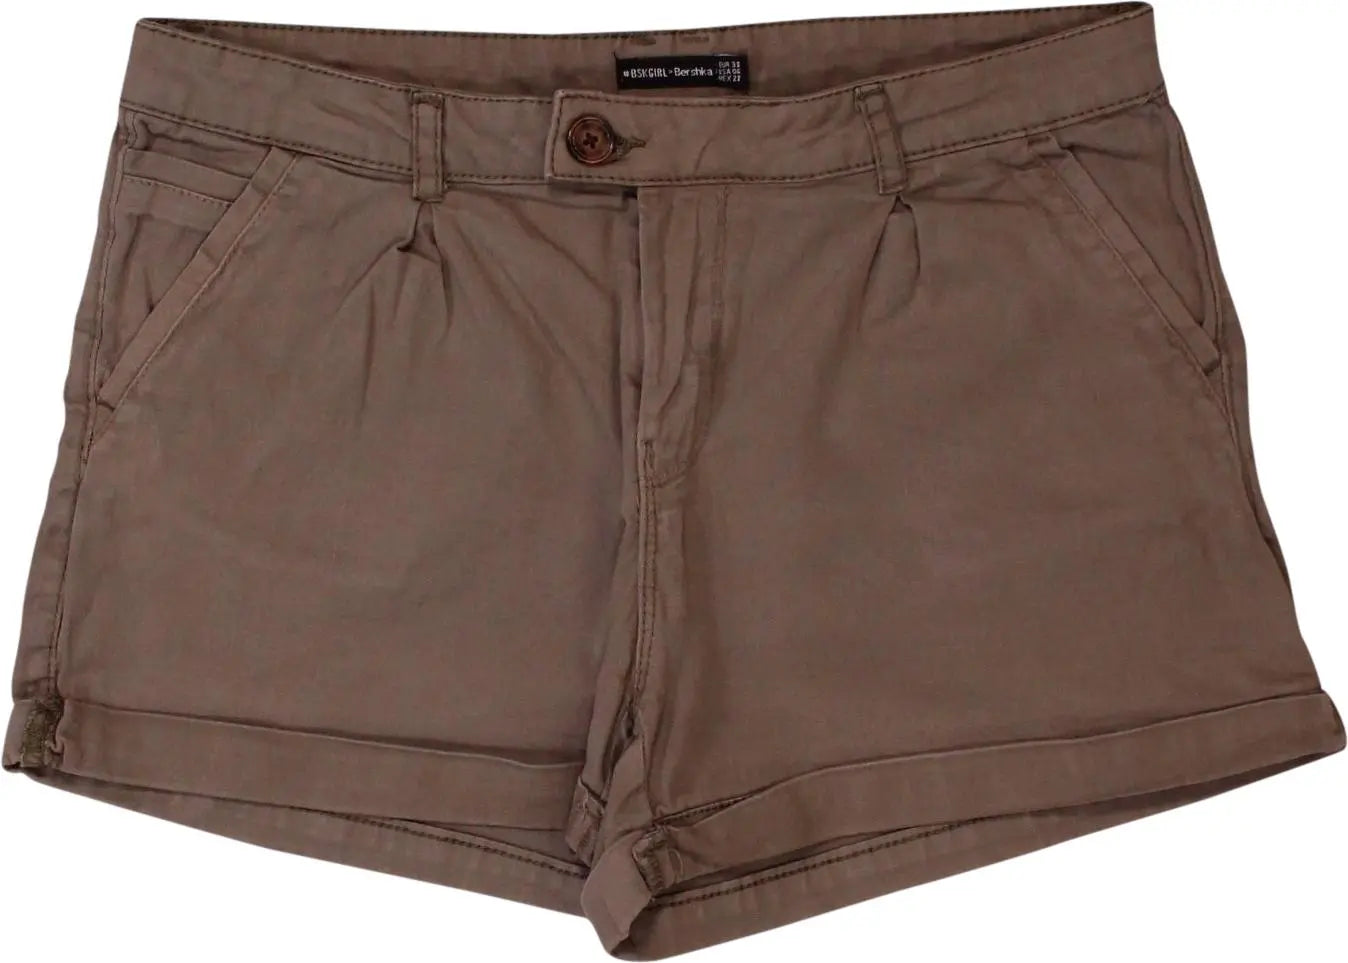 Bershka - Denim Shorts- ThriftTale.com - Vintage and second handclothing